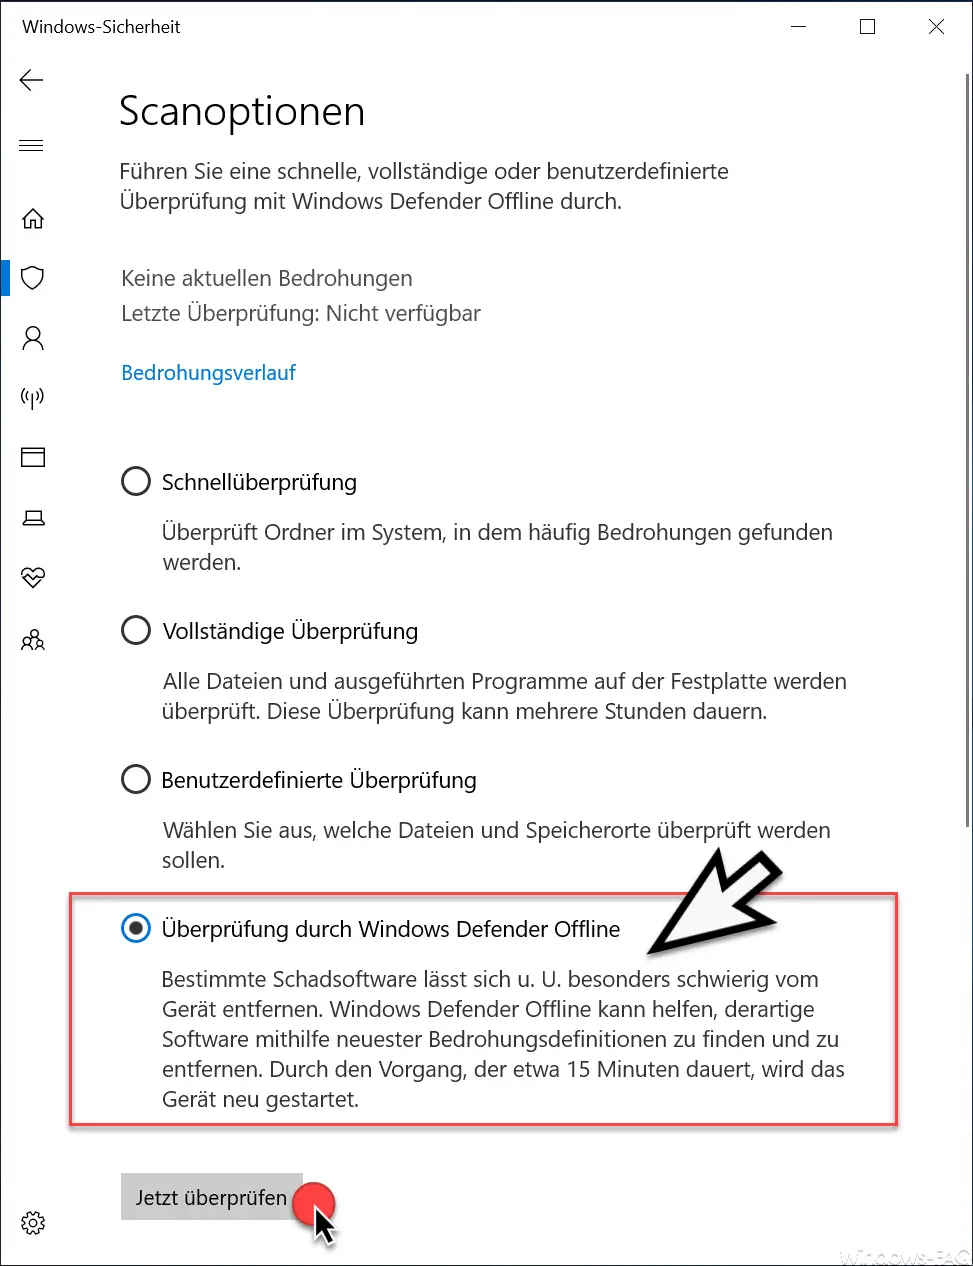 Windows Defender Offline Review